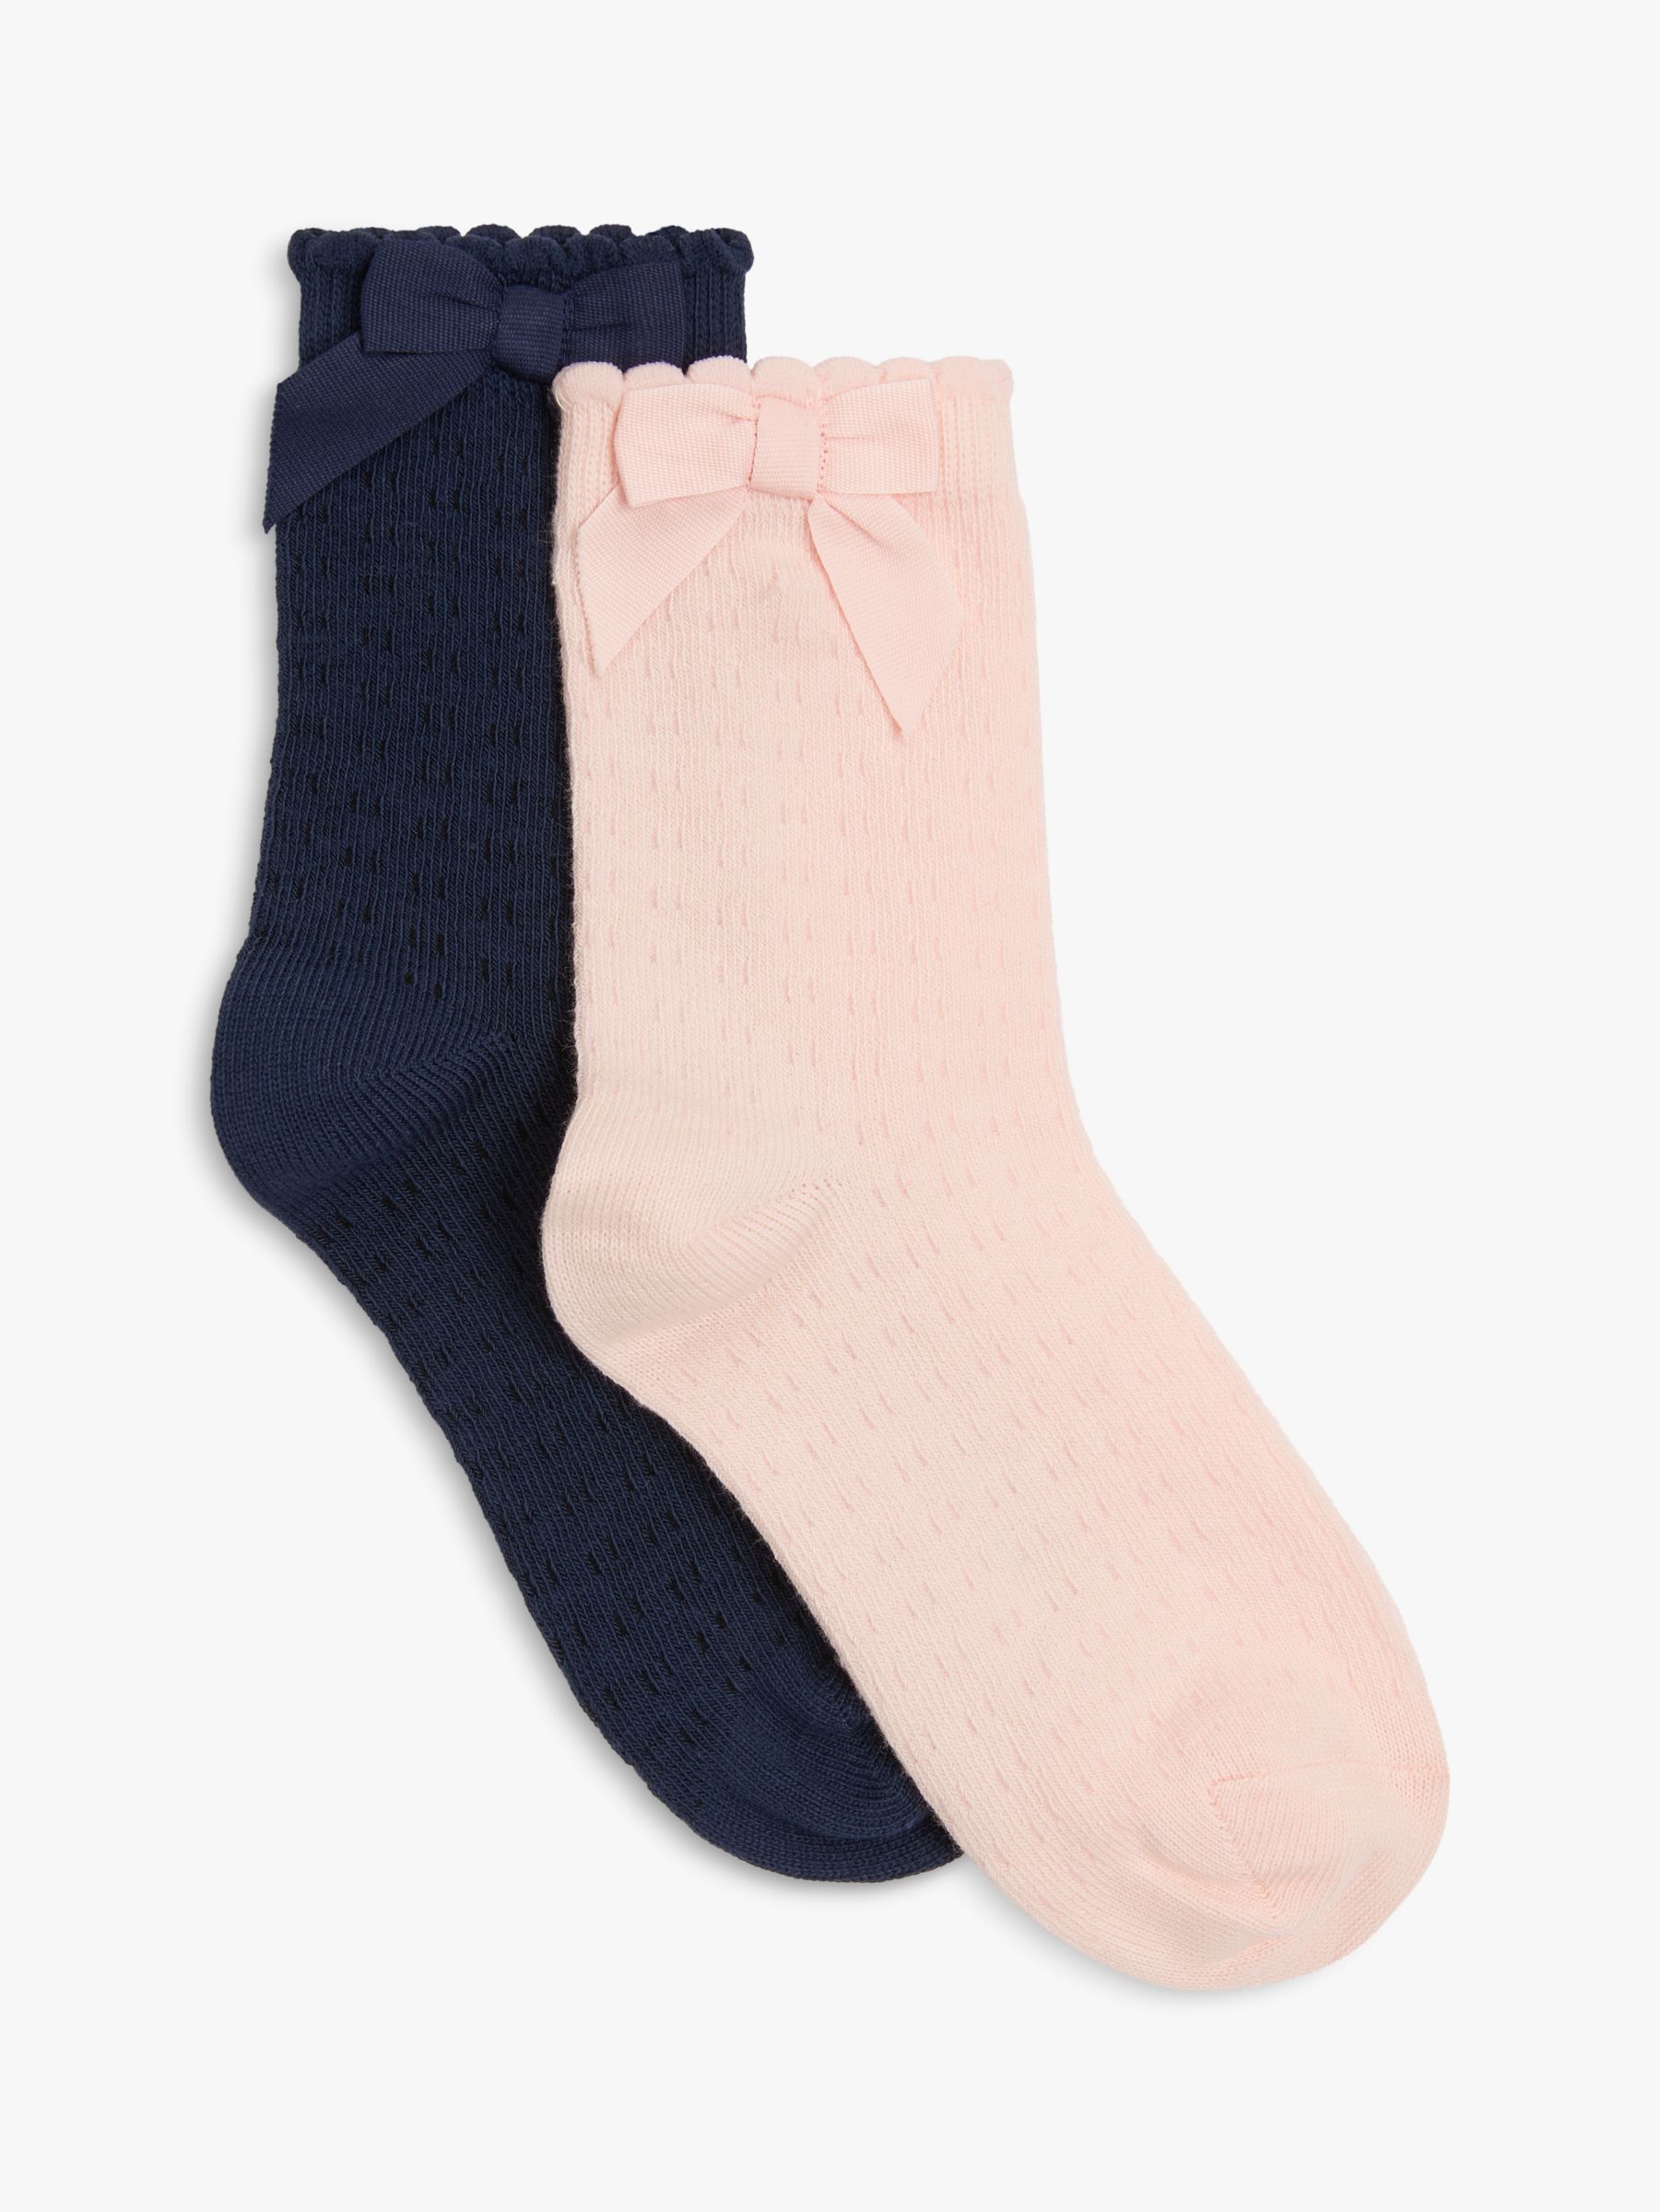 John Lewis Kids' Ribbon Frill Top Socks, Pack of 2, Blue/Pink, 12.5 Jnr - 3.5